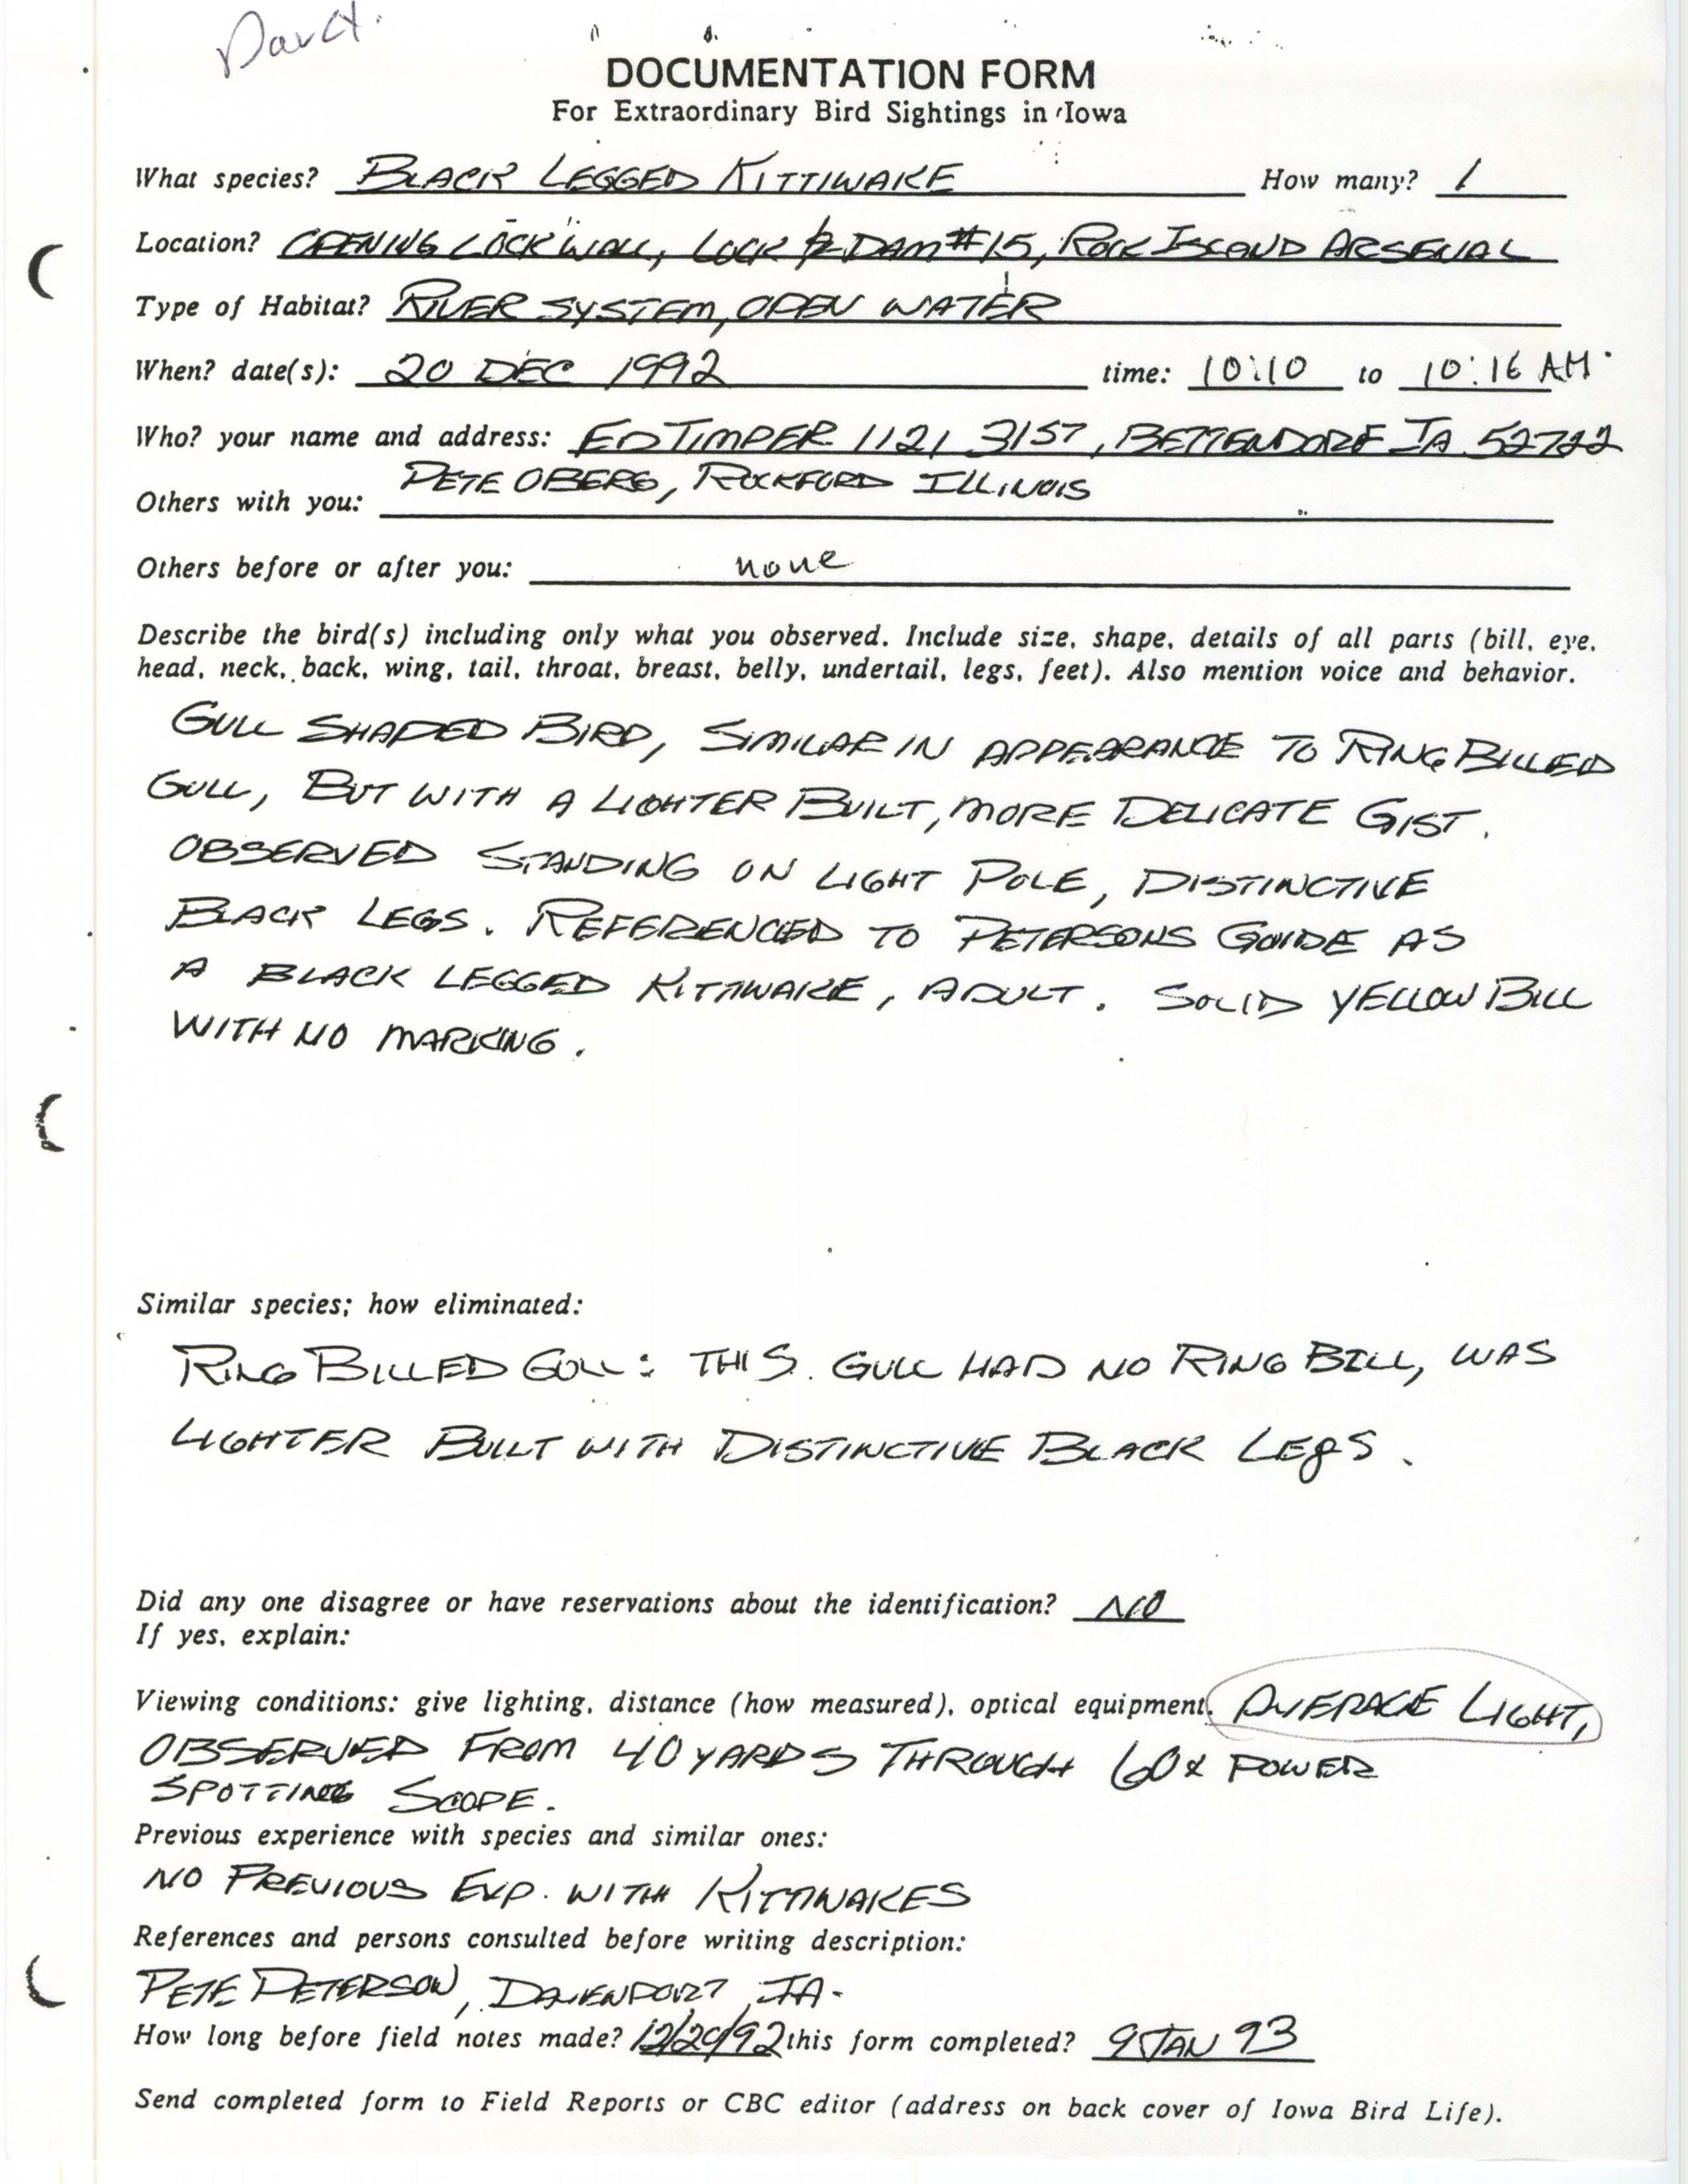 Rare bird documentation form for Black-legged Kittiwake at Lock and Dam 15, 1992